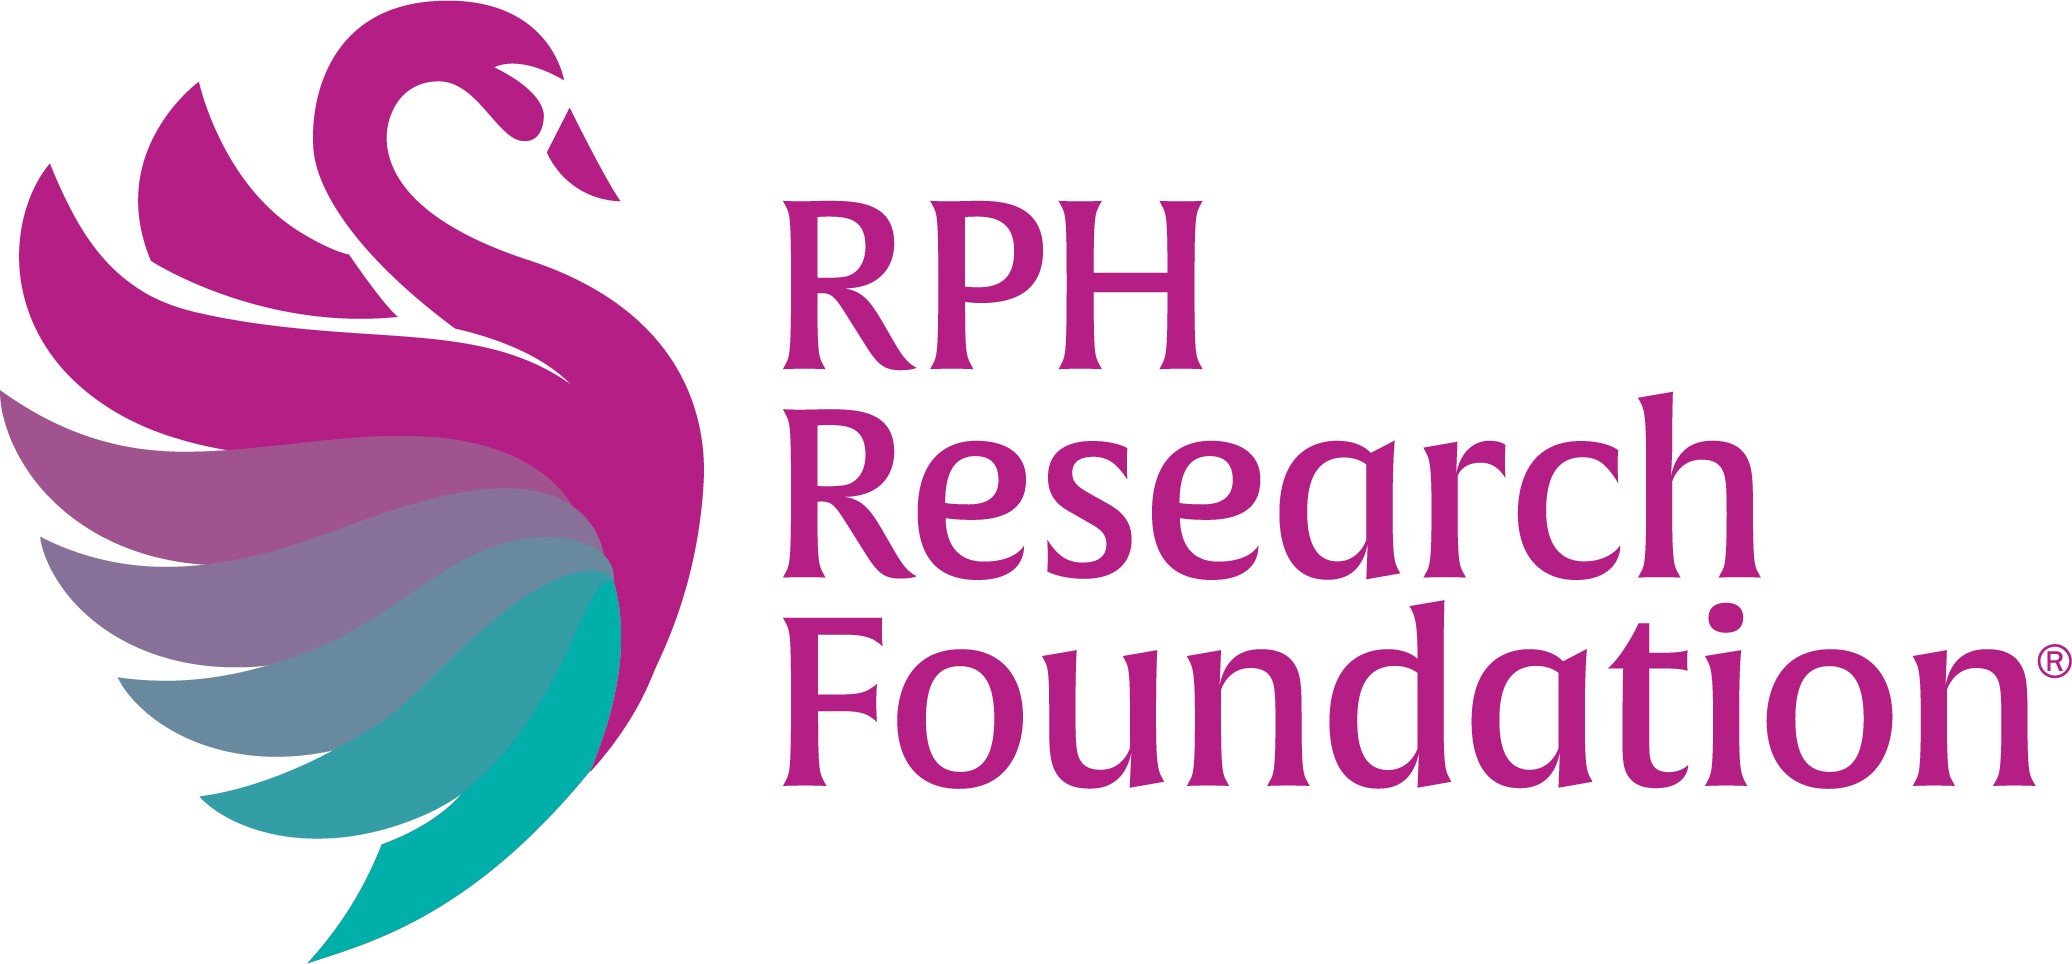 RPH RF logo.jpg